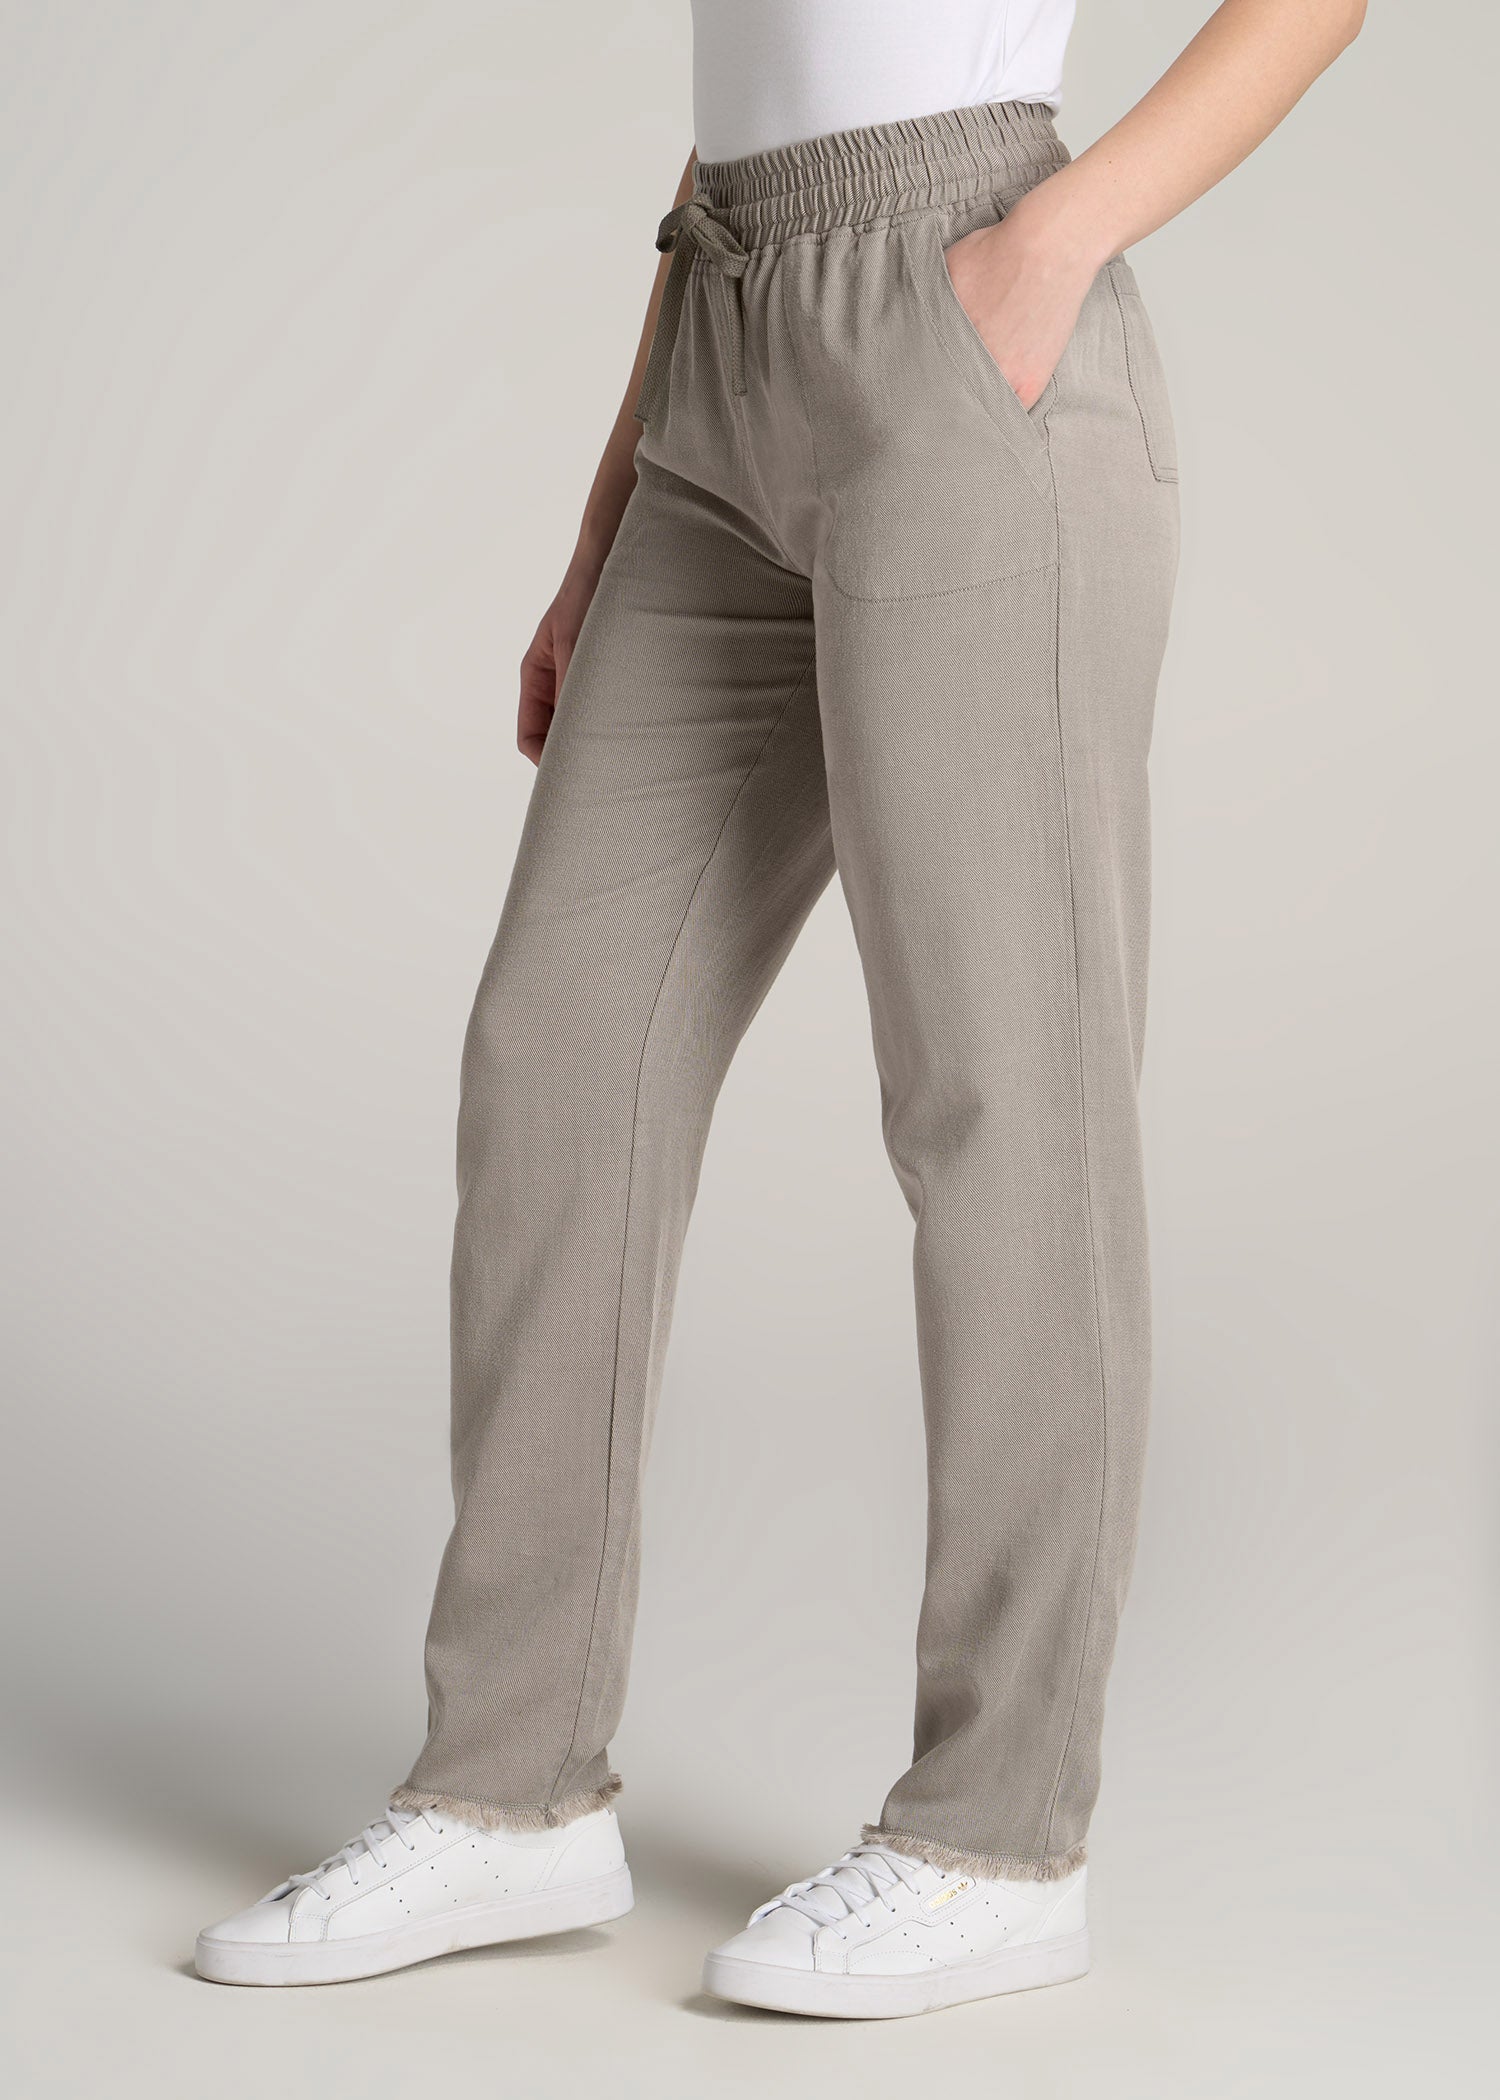 Women's striped linen trousers, Brown-White | Manufactum